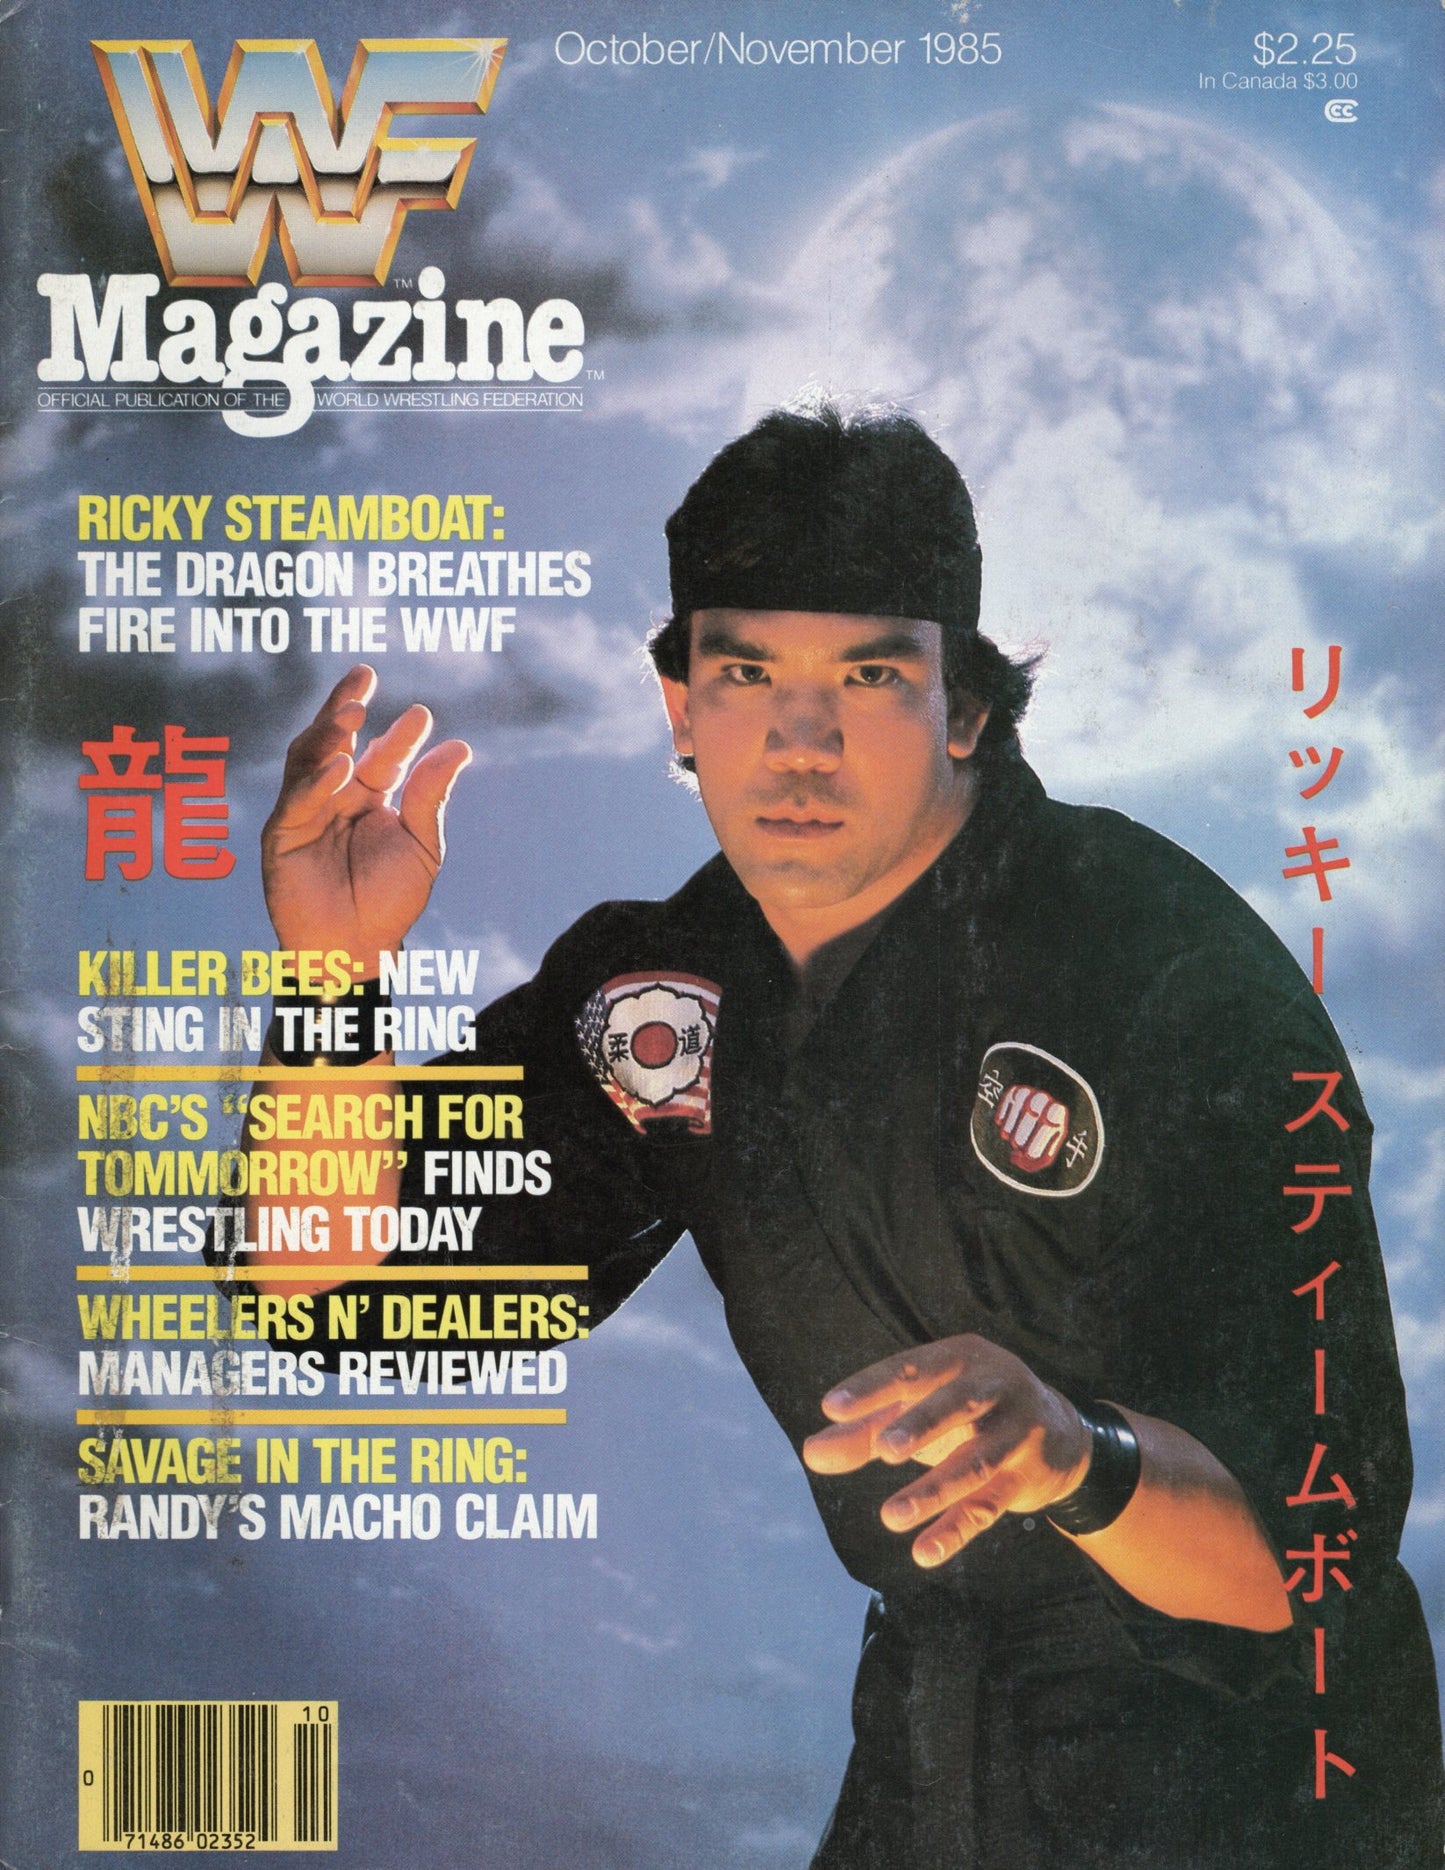 WWF Magazine October/November 1985